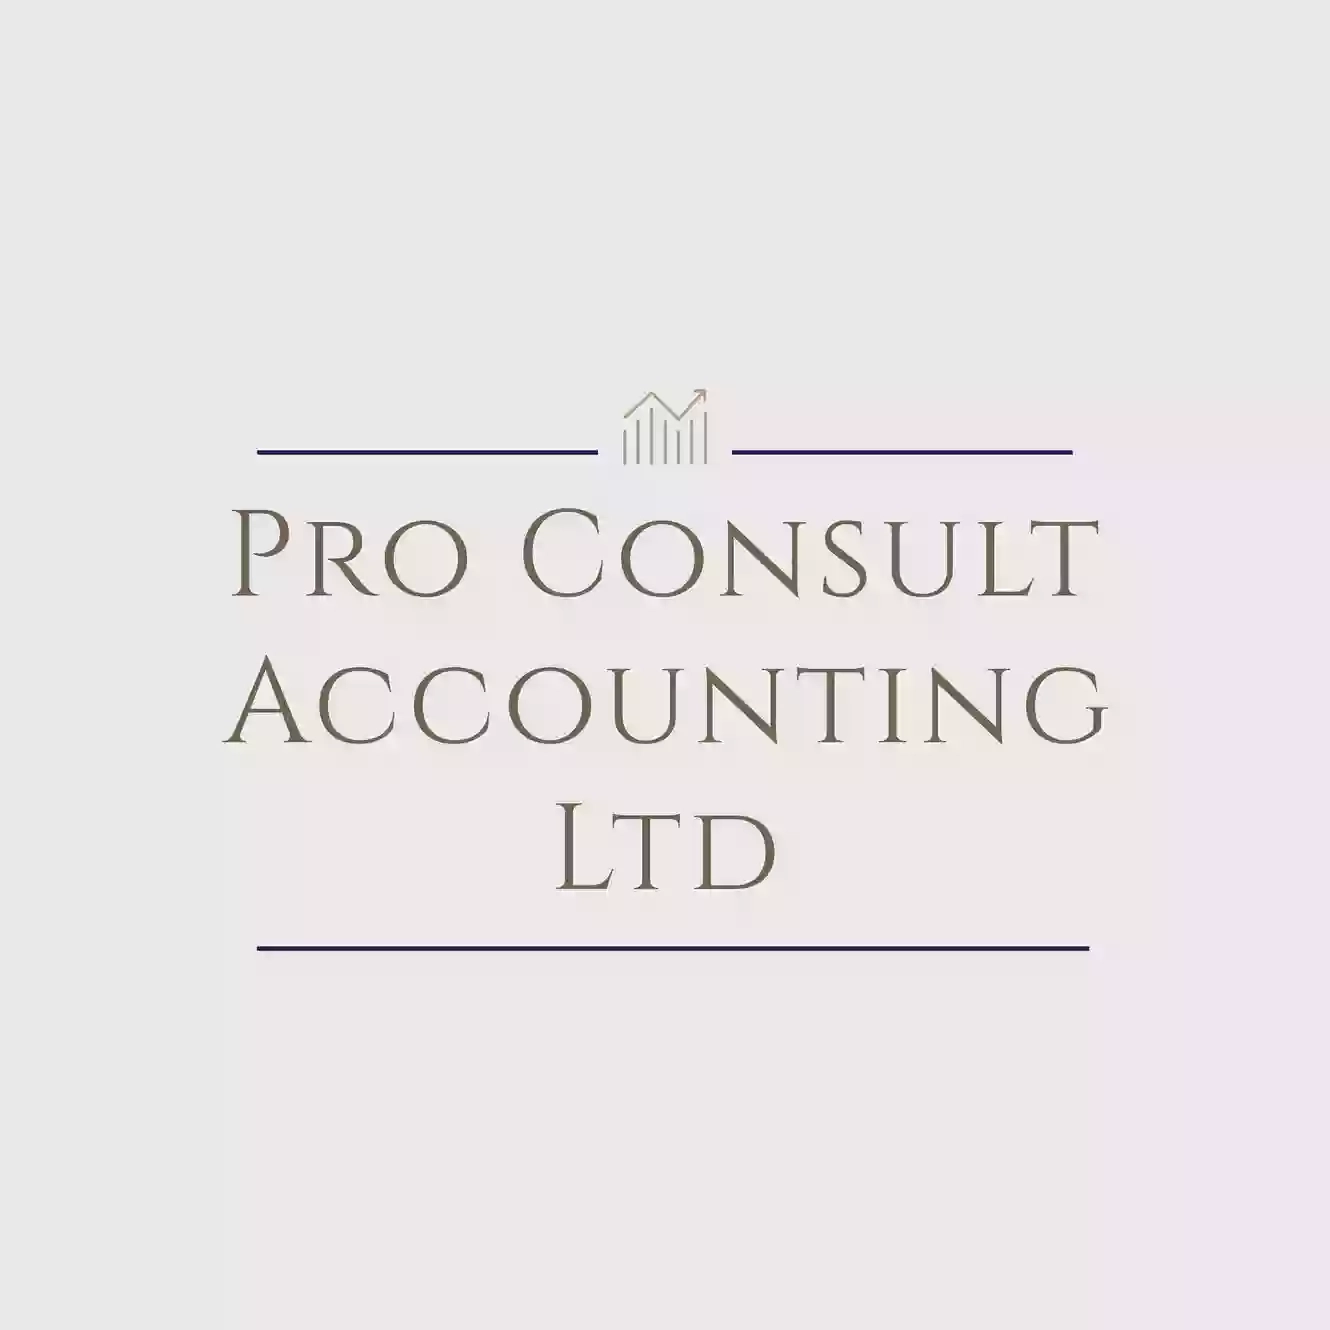 Pro Consult Accounting Ltd